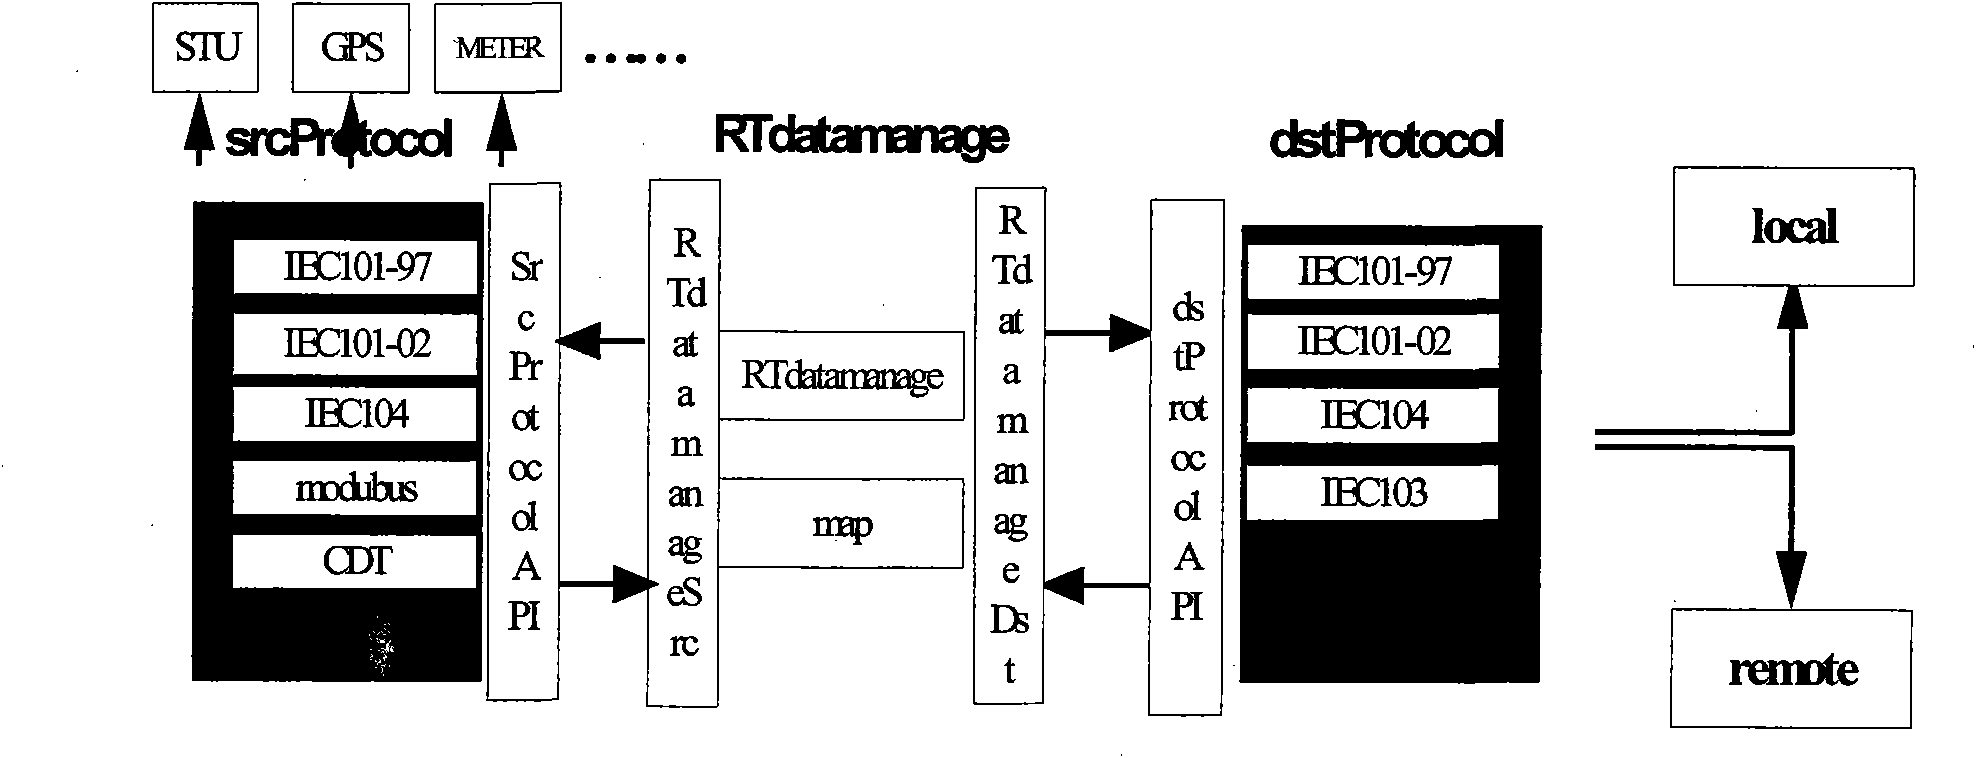 Intelligent network remote terminal unit (RTU) system of electrified railway